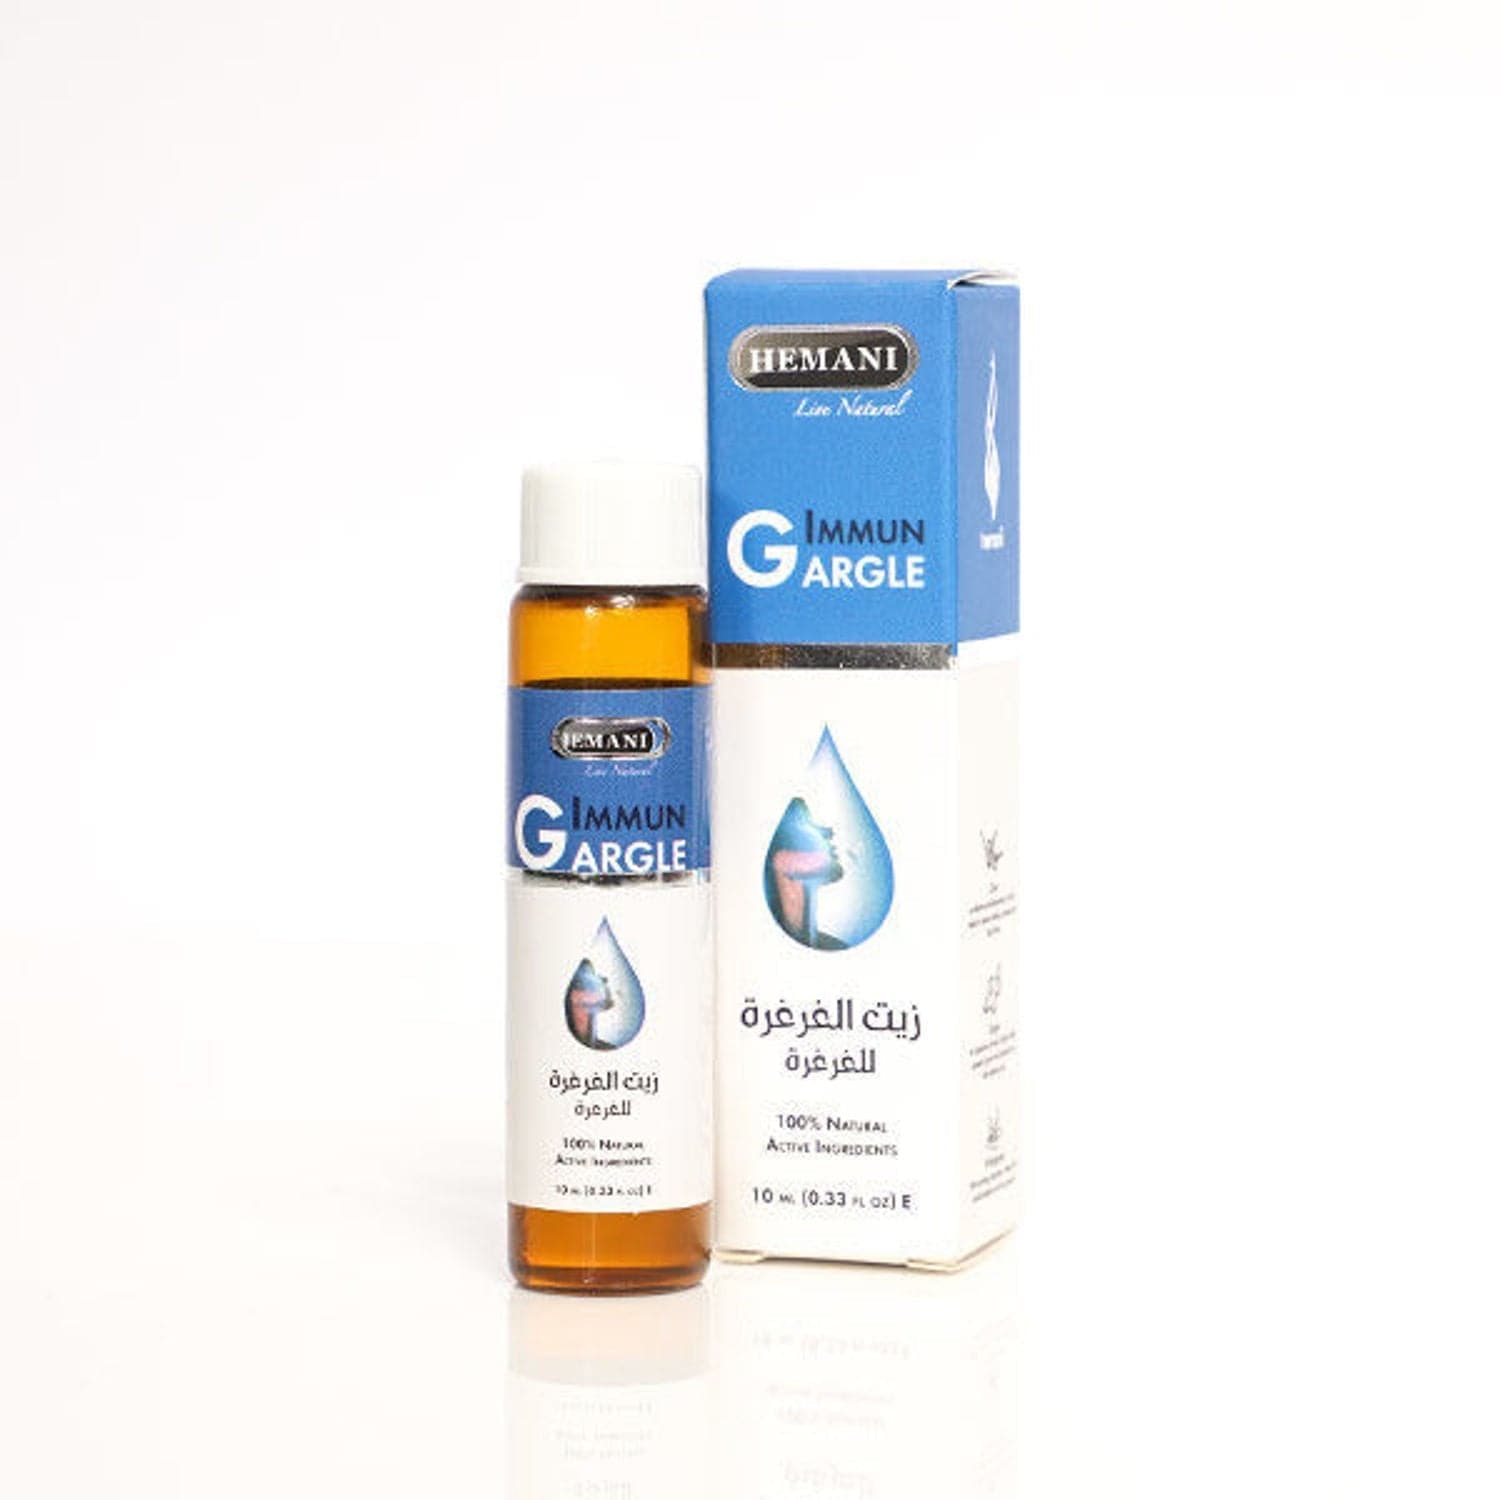 Hemani Immun Gargle Oil 10Ml - Premium  from Hemani - Just Rs 520.00! Shop now at Cozmetica